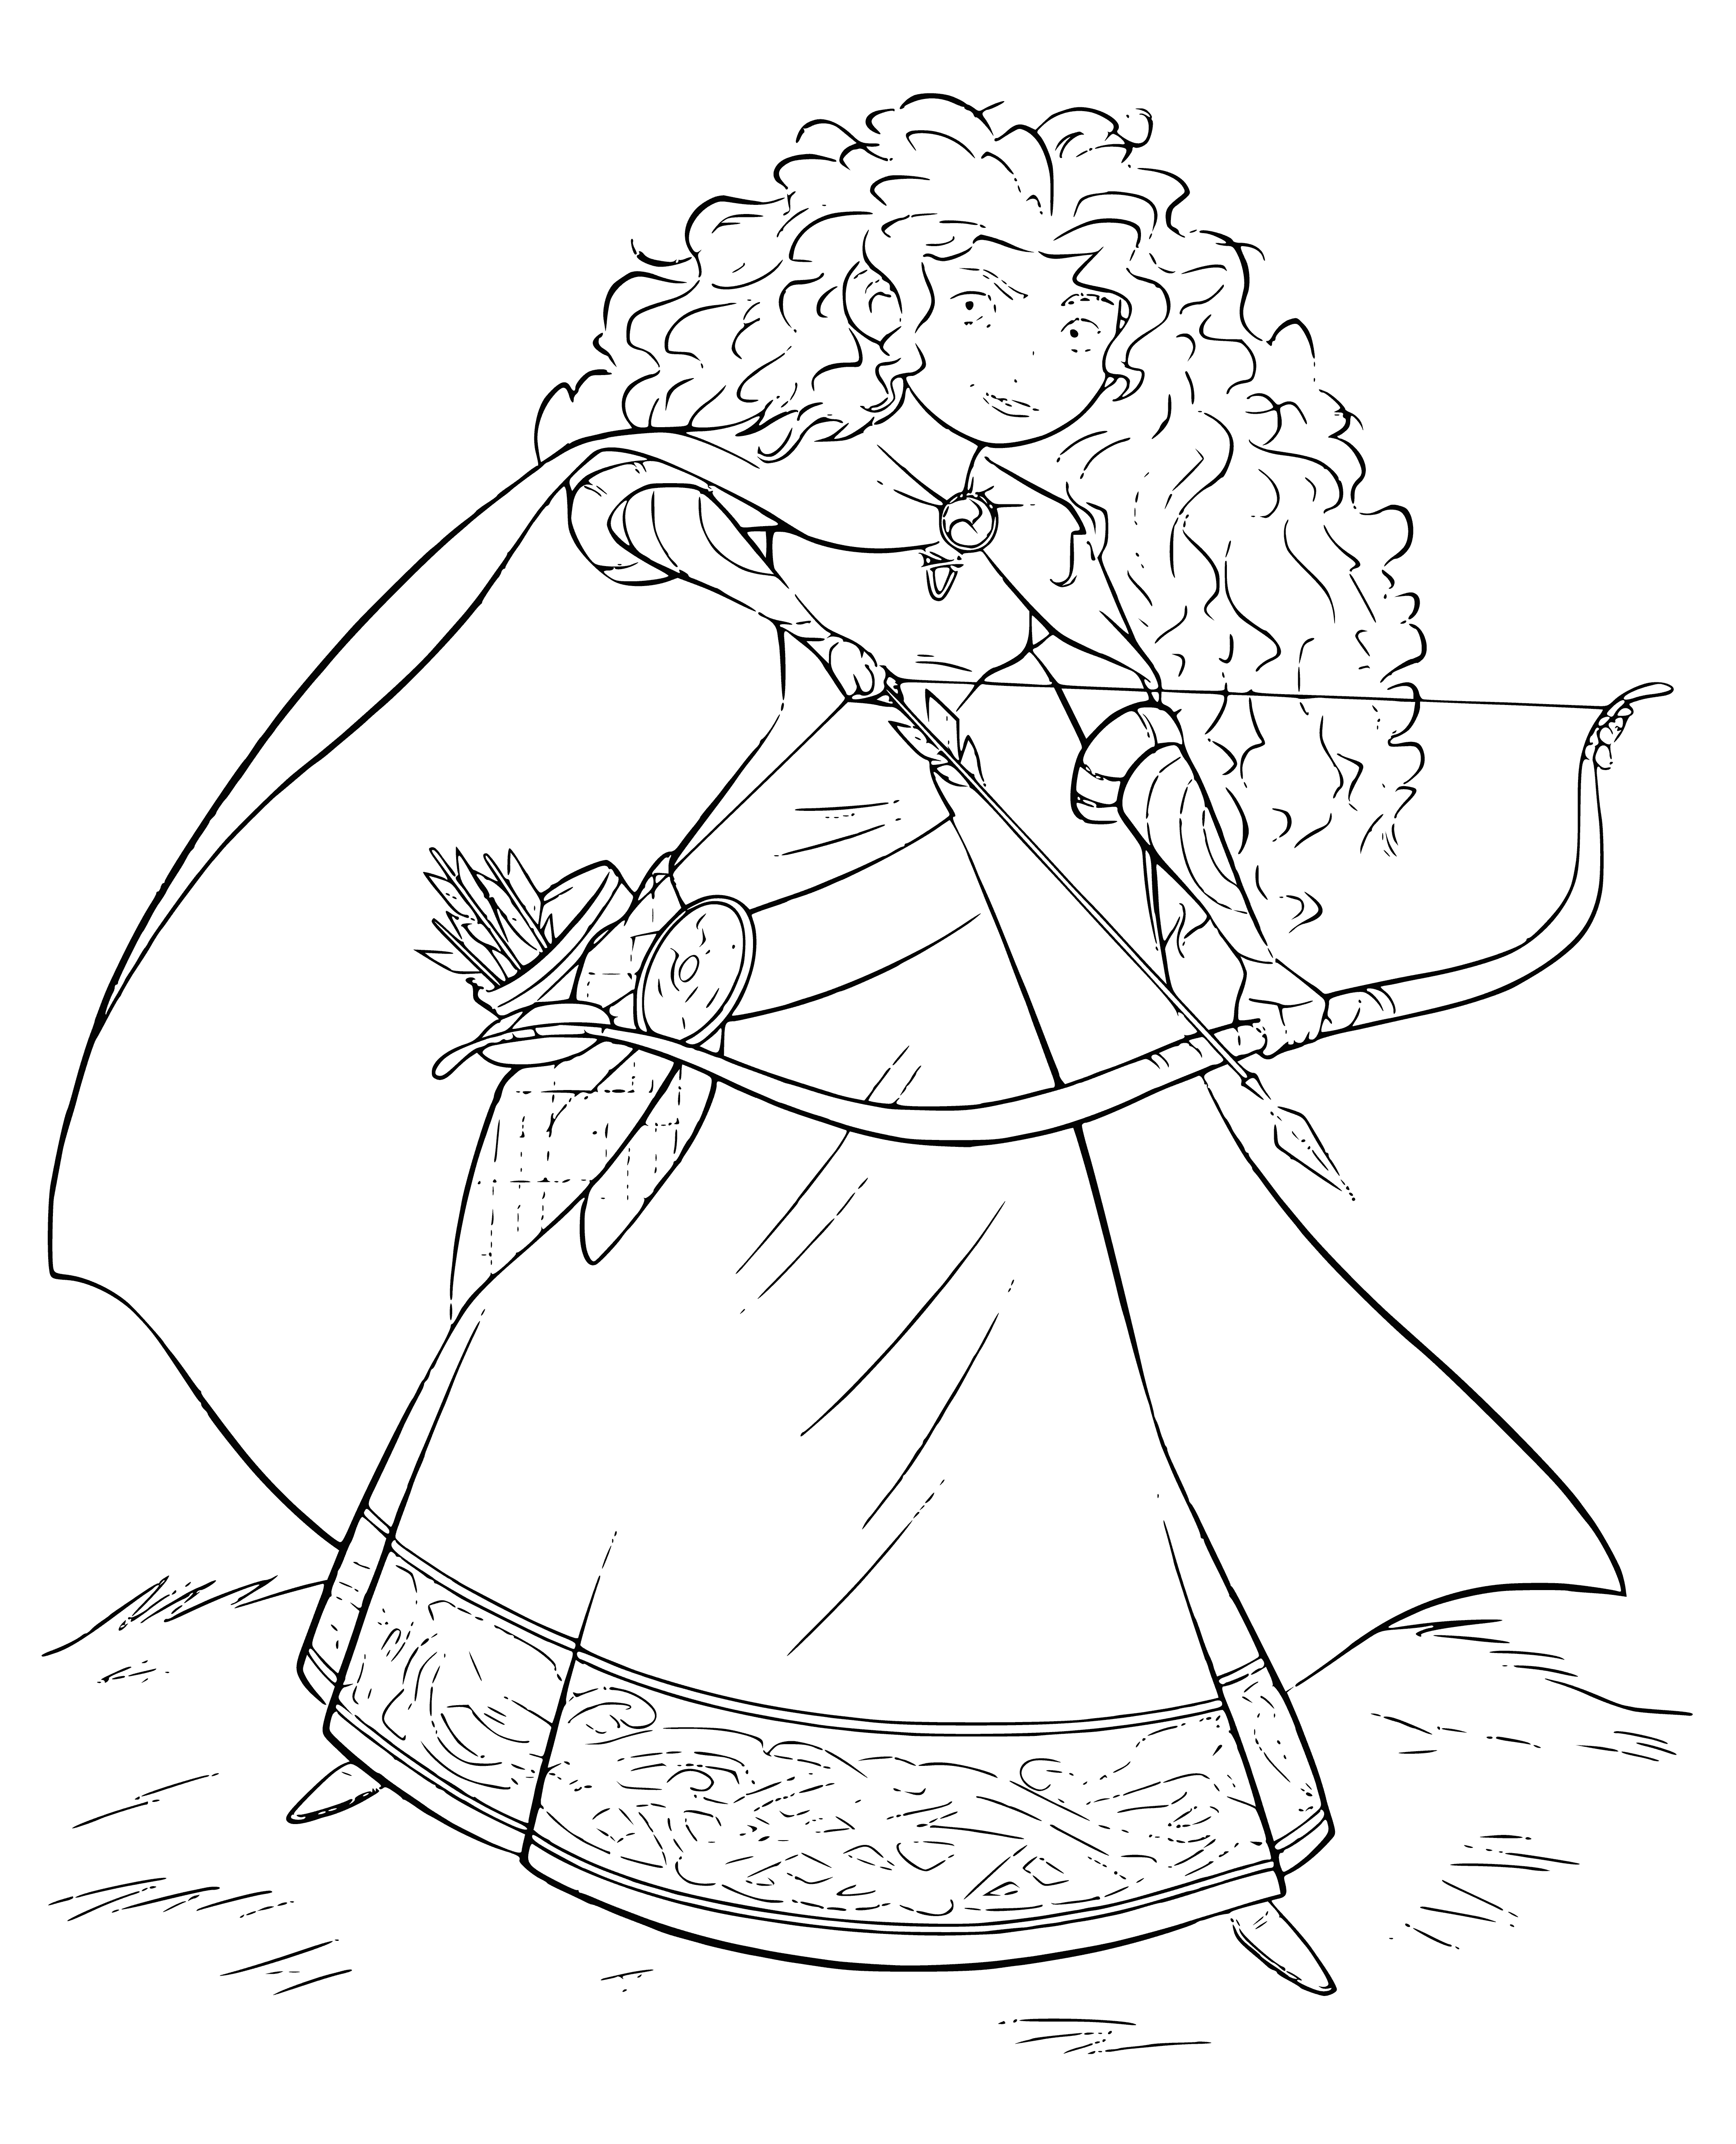 Princess Merida with bow coloring page